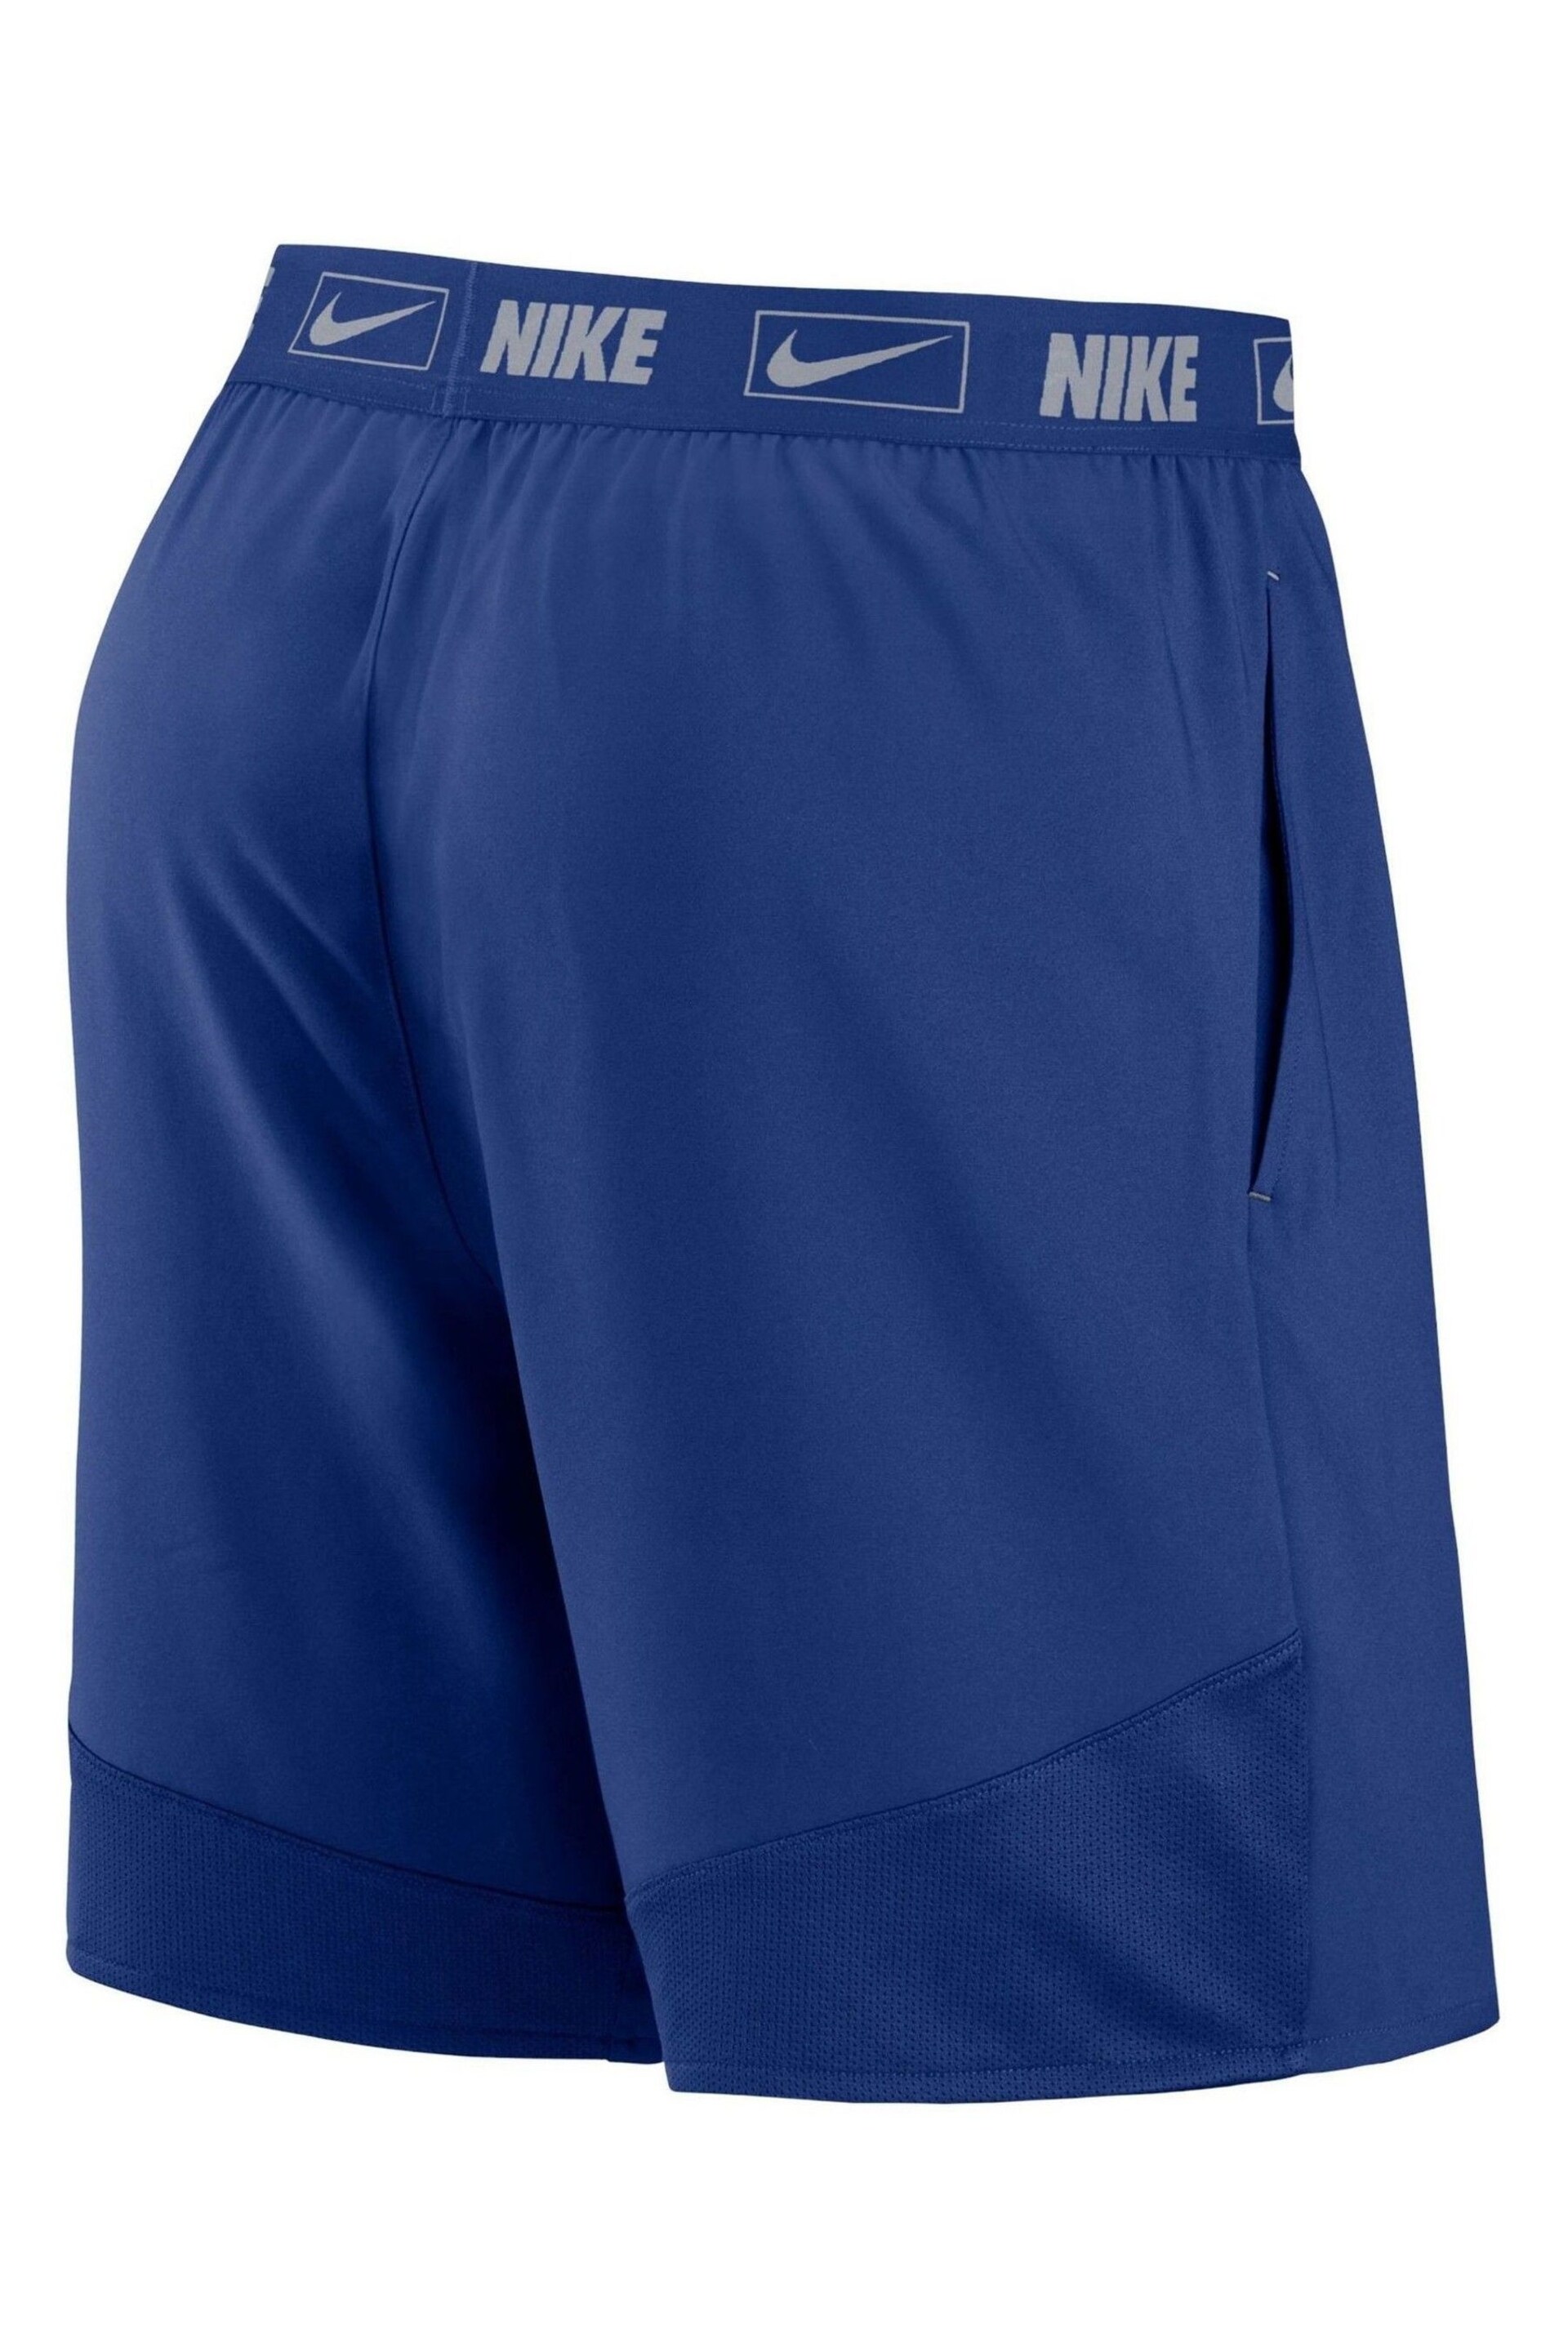 Nike Blue Texas Rangers Bold Express Woven Shorts - Image 3 of 3